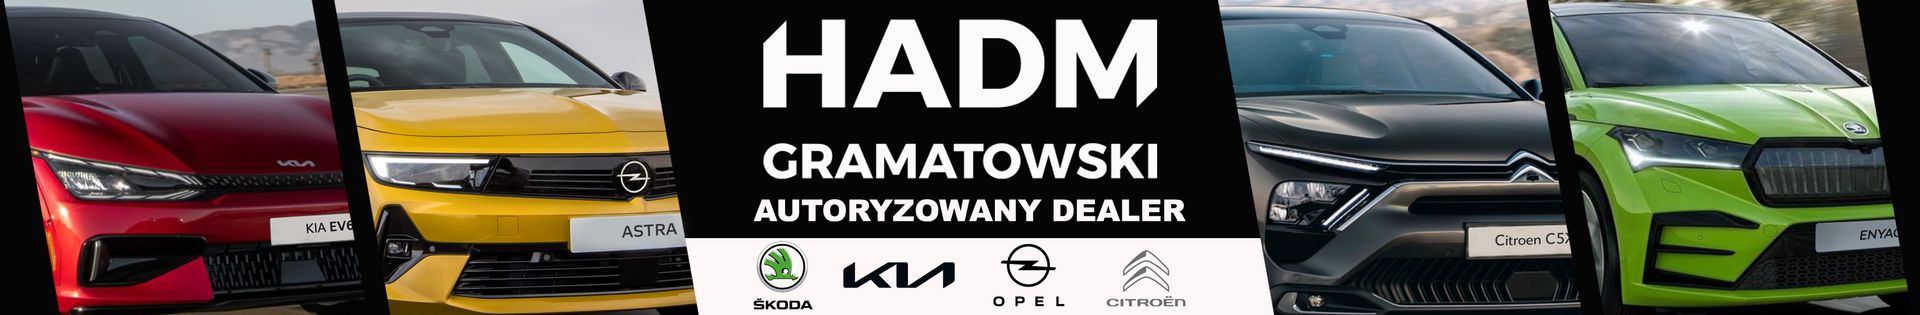 HADM Gramatowski - Autoryzowany Dealer SKODA i KIA top banner